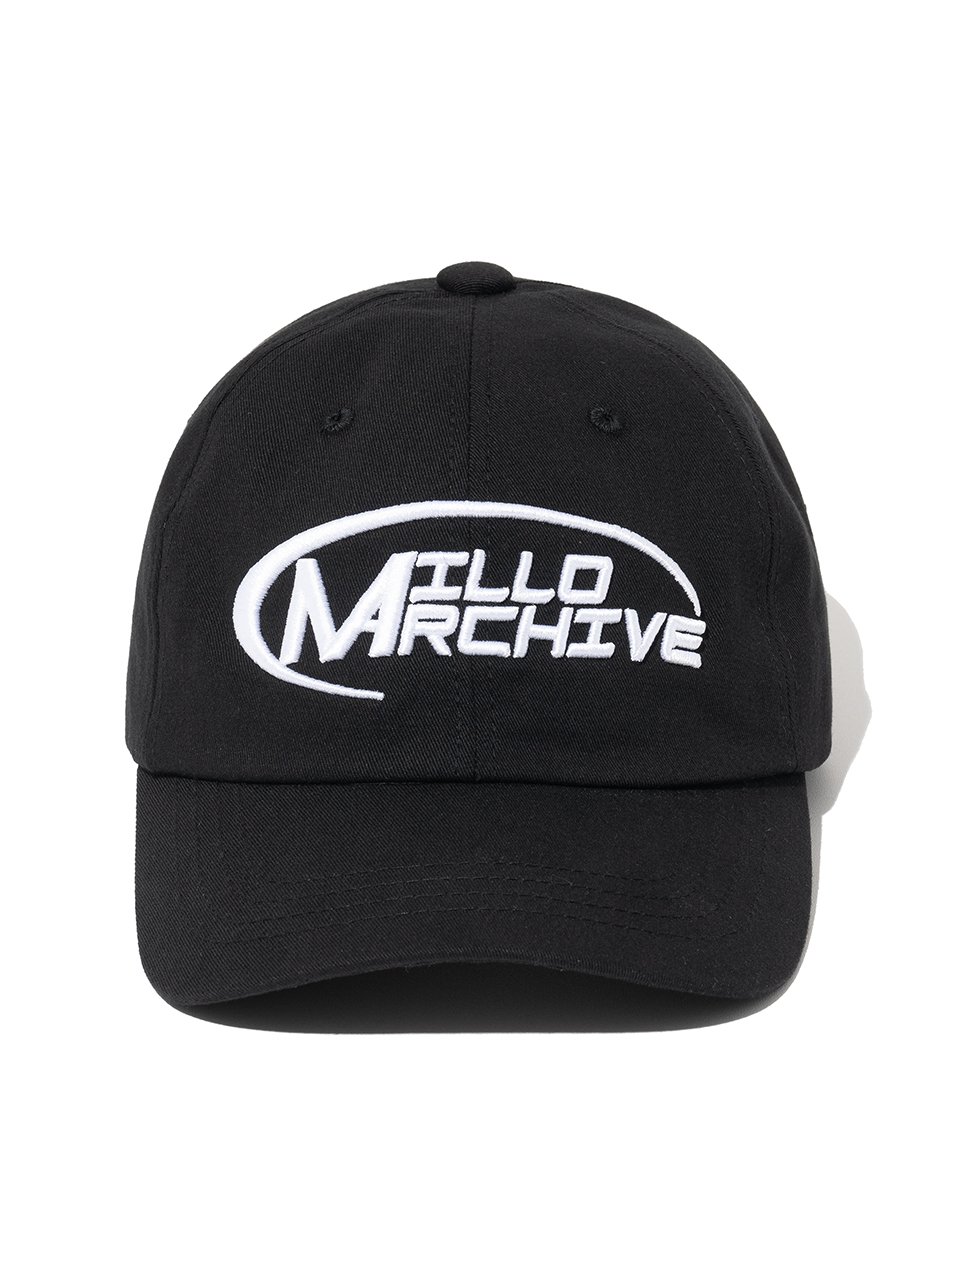 MILLO ARCHIVE Logo Ball Cap - Black